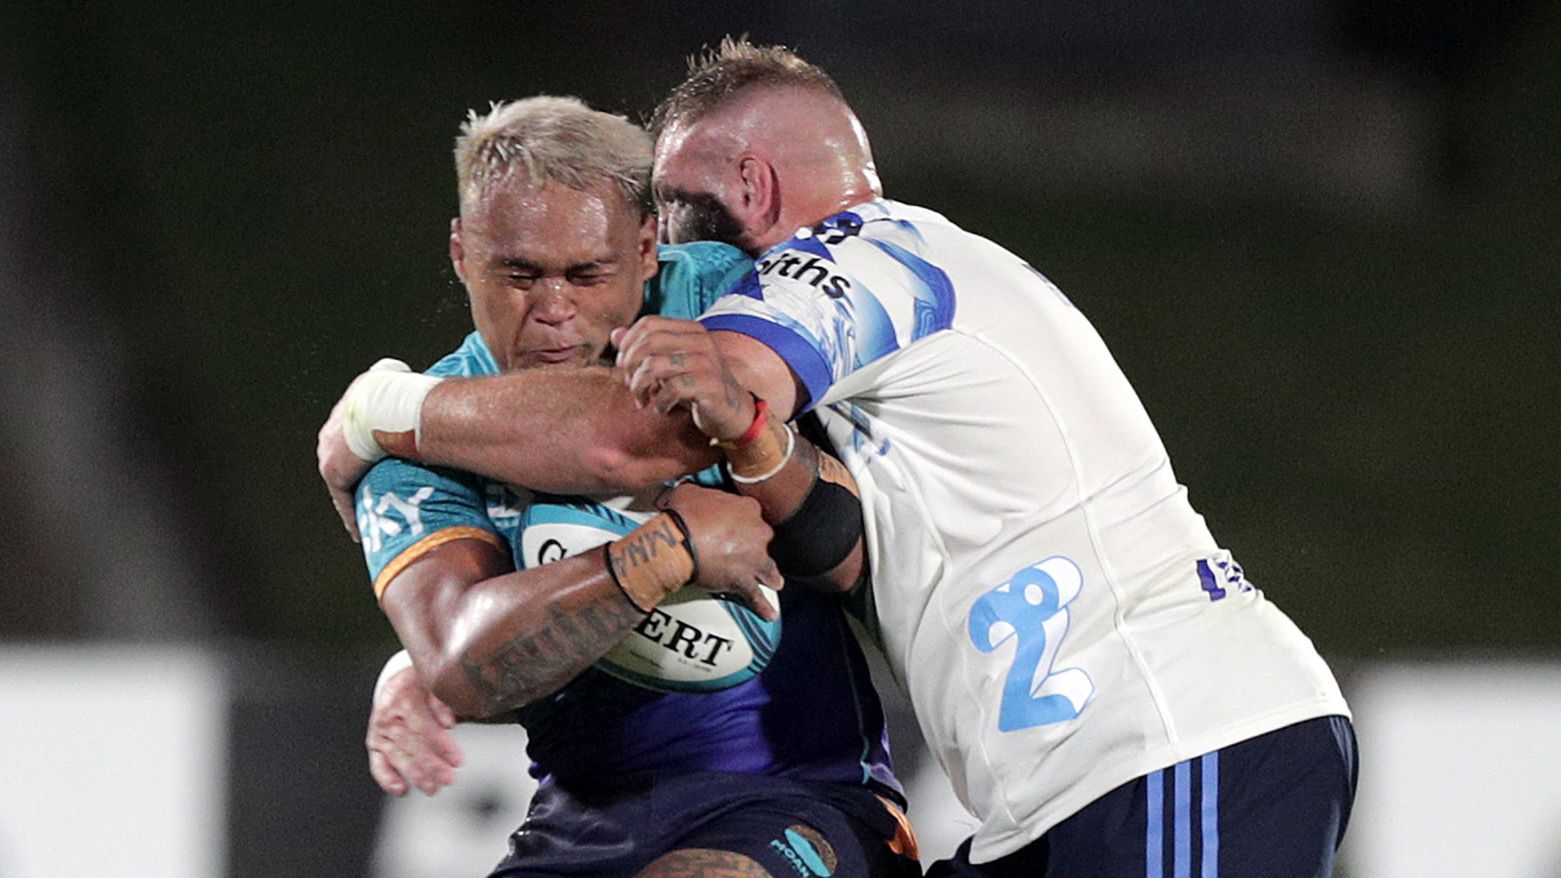 Super Rugby rookies Moana Pasifika push Blues in tight loss